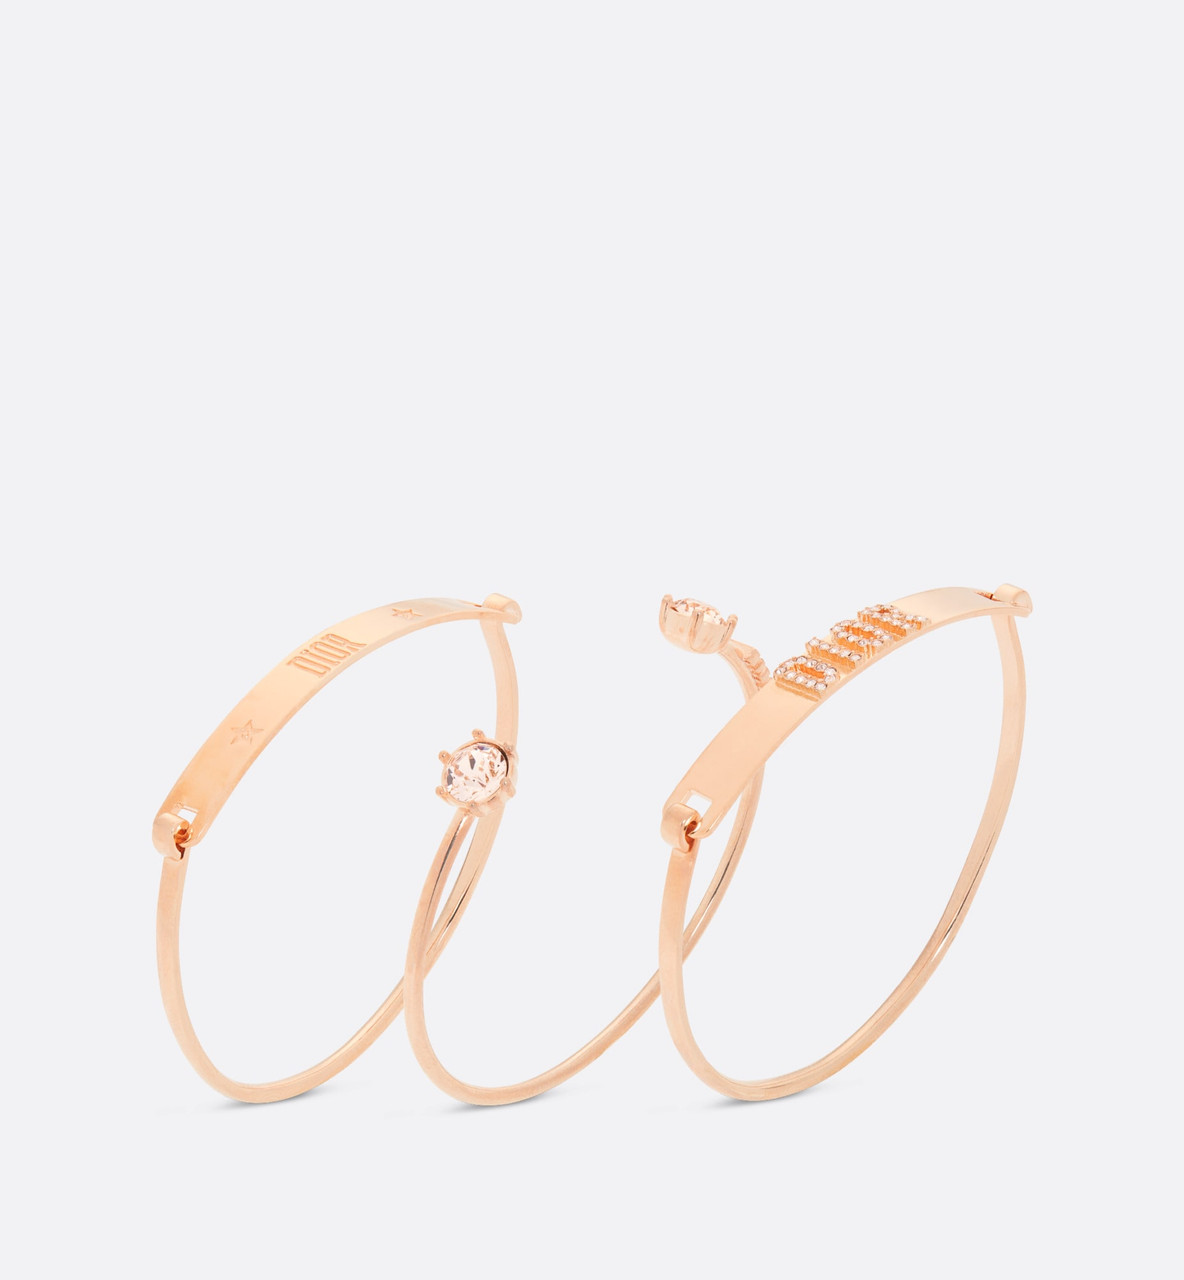 Buy Unisex Infinity Love Knot Bracelet Set Snake Chain Knot Bracelet Dainty  Couple Bracelet Set for Couples Handmade Couple Valentine Gift Online in  India - Etsy